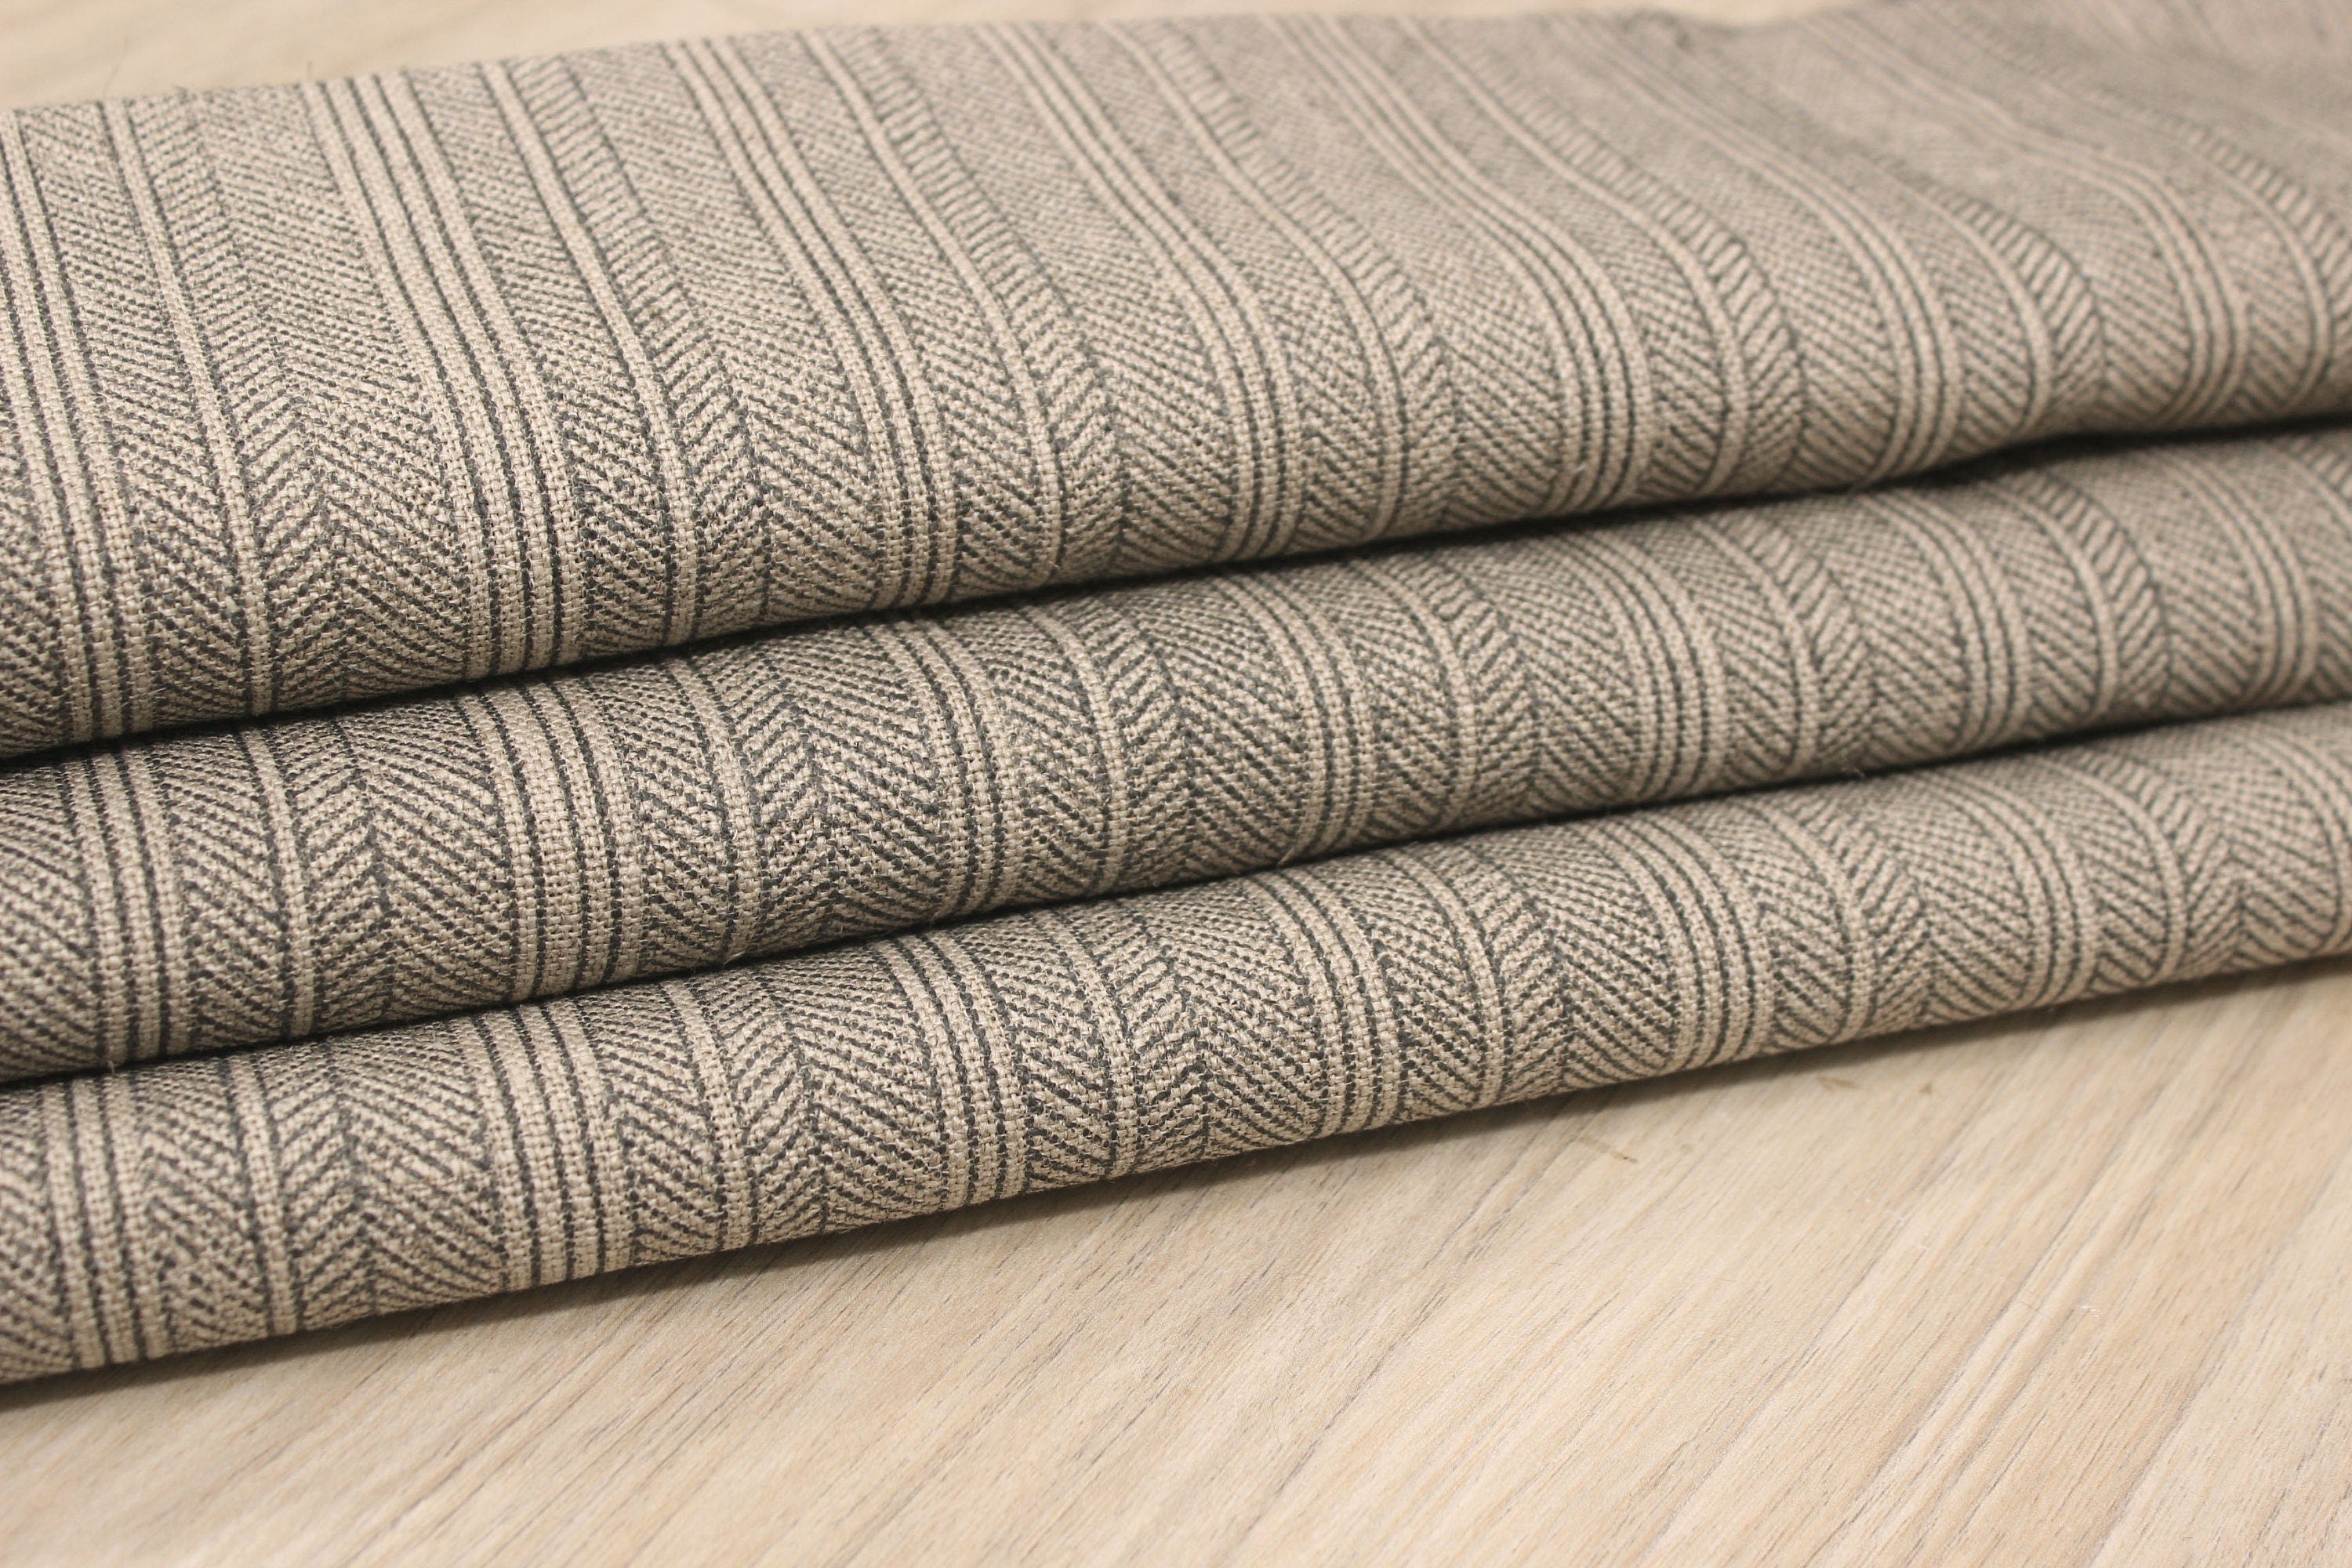 Black Leheriya  100% Flax Linen With Block Print  Handmade Wood Blocked Printing  Indian Fabrics By The Yard  Upholstery & Pillow Decors